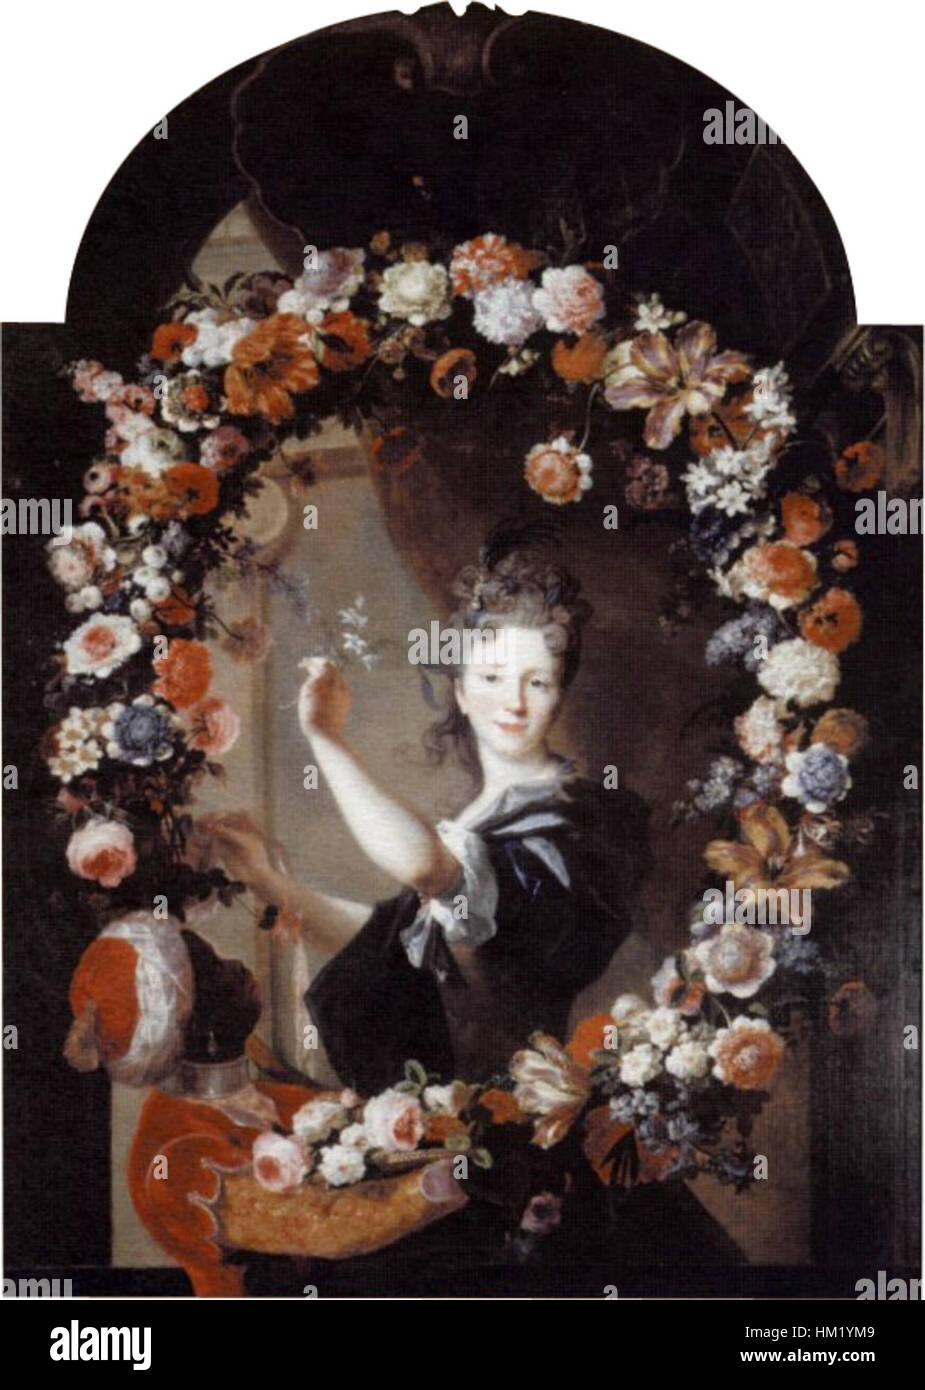 Largilliere, Nicolas de & Jean-Baptiste Belin de Fontenay - Helene Lambert de Thorigny, c. 1696-1700, oil on canvas, 63 x 45 in Stock Photo